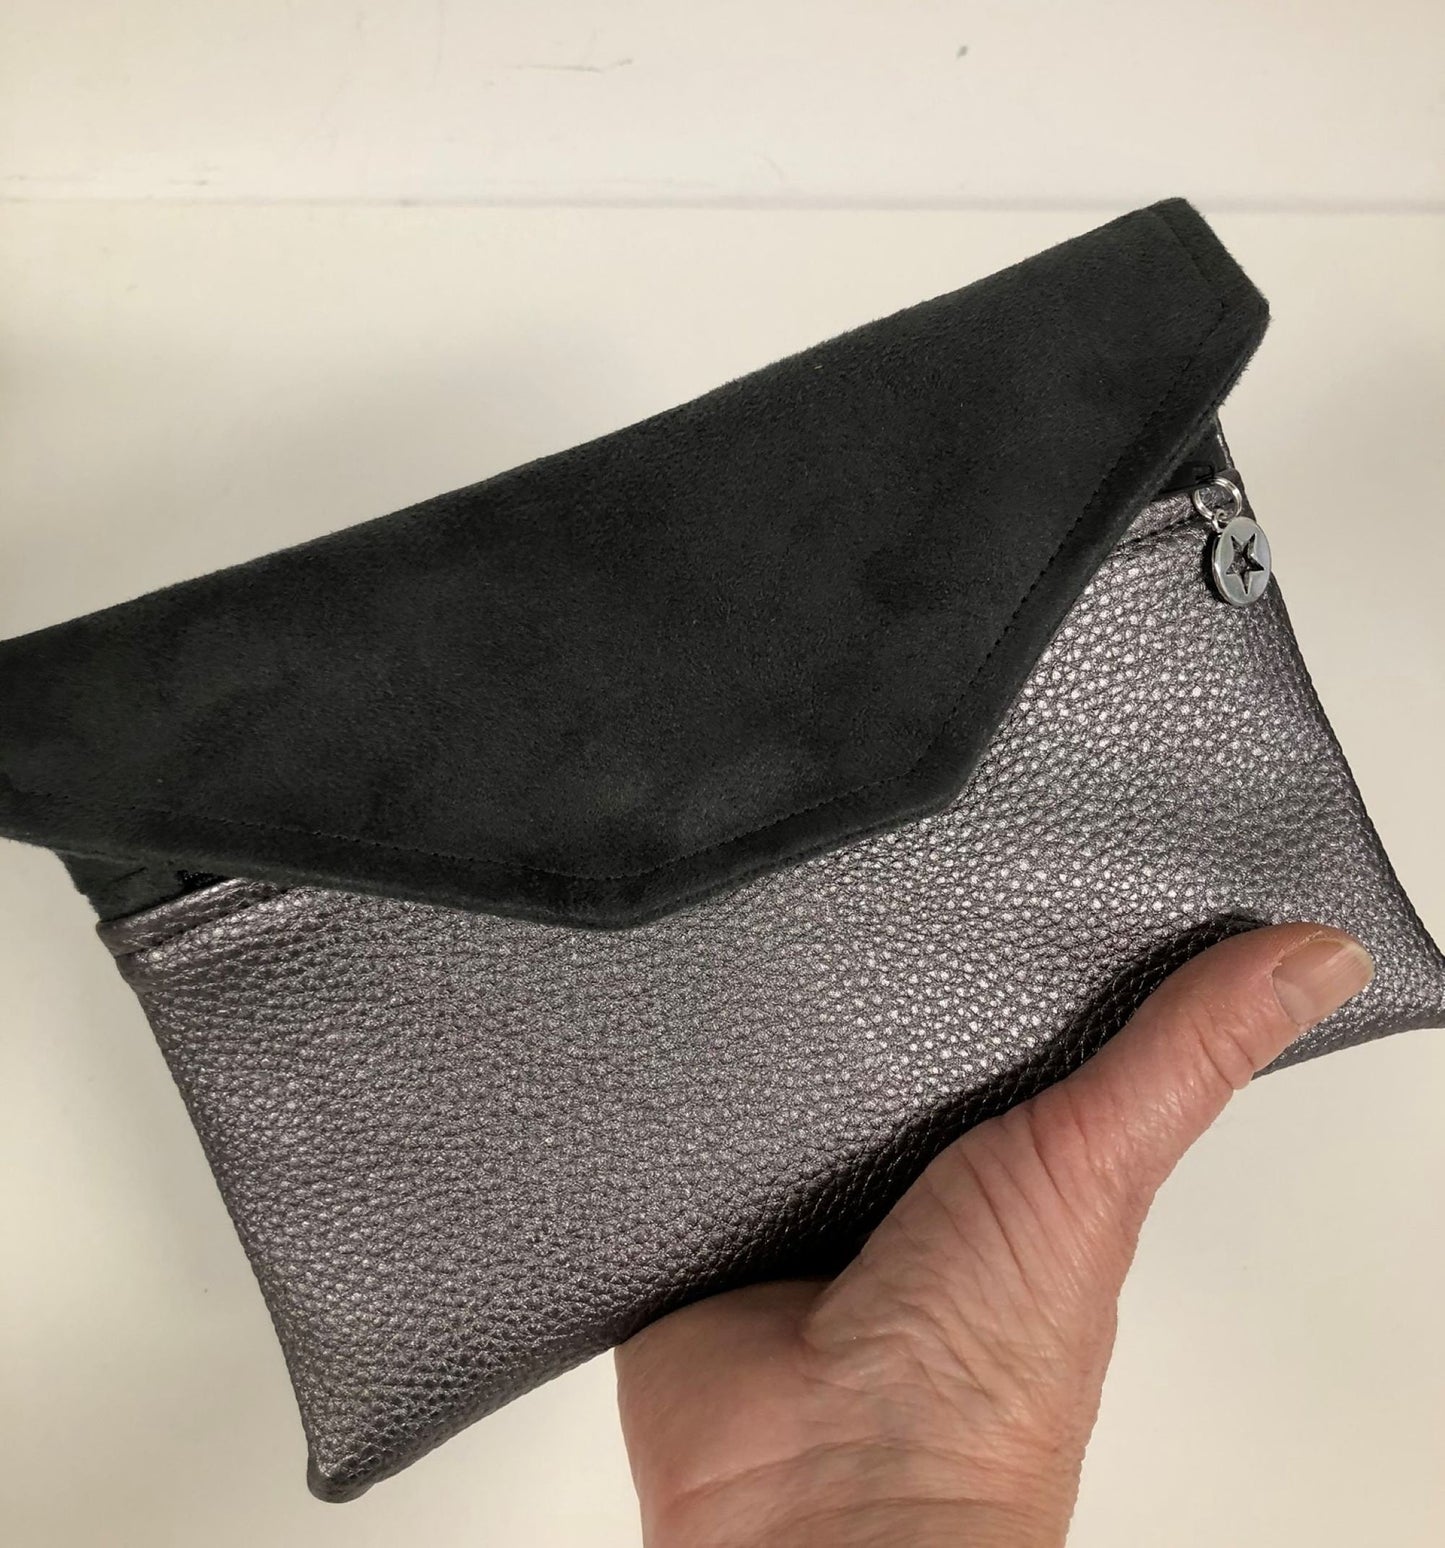 Iridescent gray bag companion